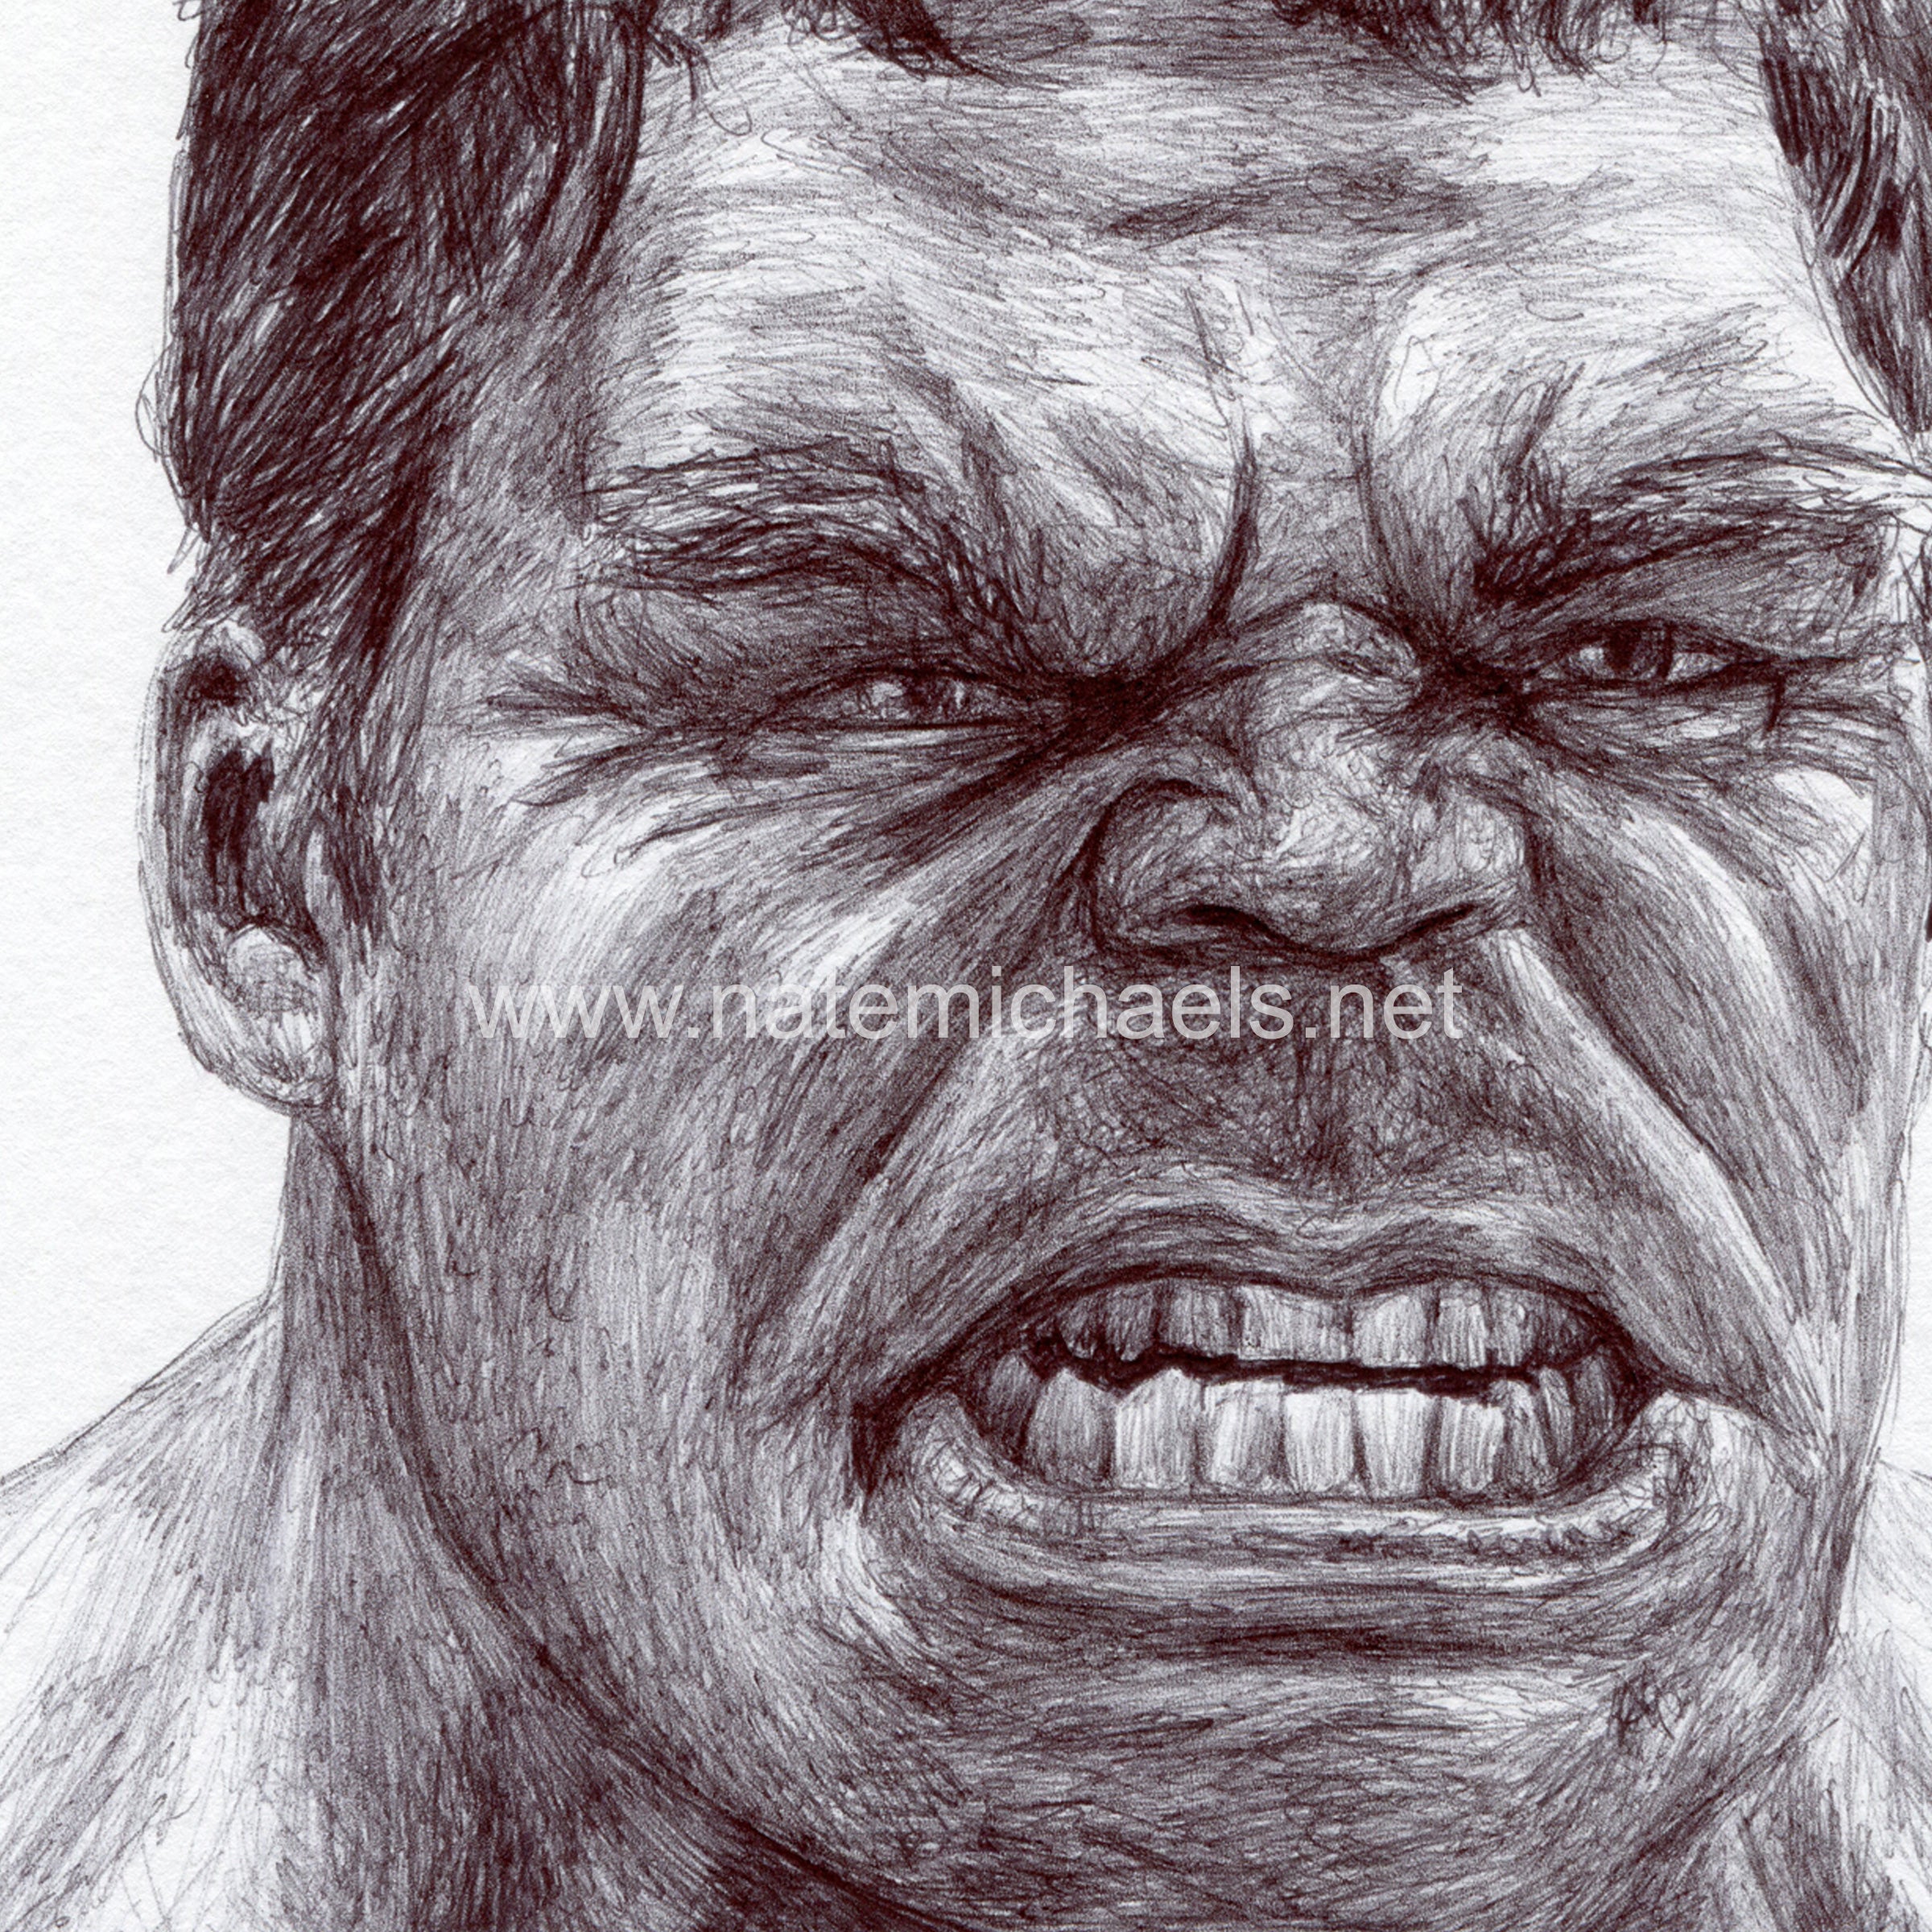 Thalo Halo on Tumblr: A quick Hulk sketch before bed. #hulk #avengers  #brucebanner #superhero #green #drawing #art #fanart...